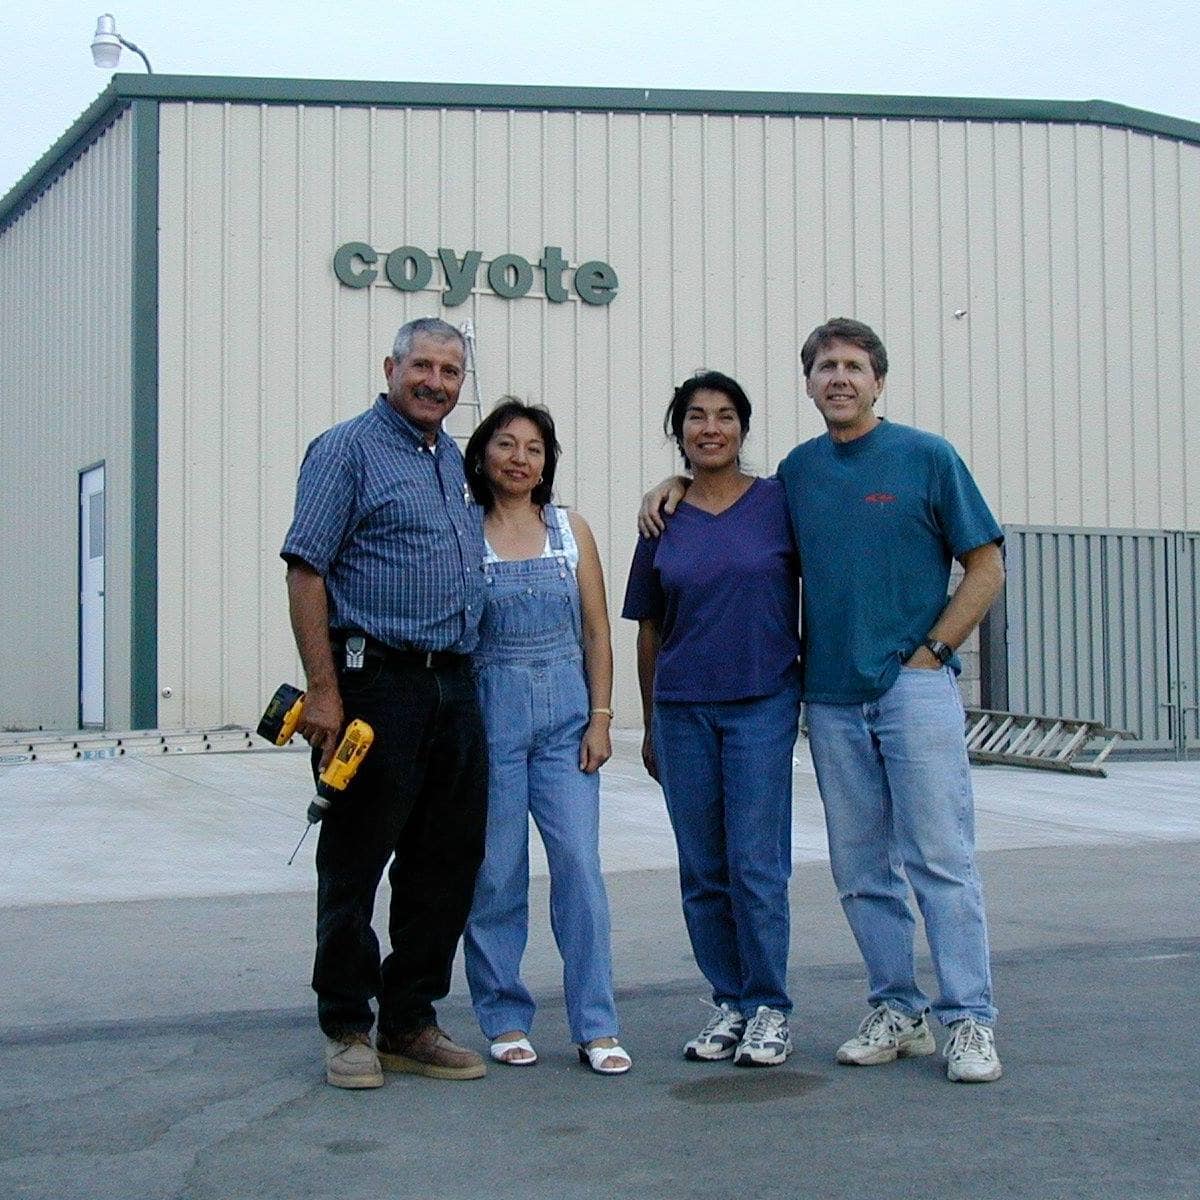 Court dismisses Coyote Aviation’s suit against Redlands